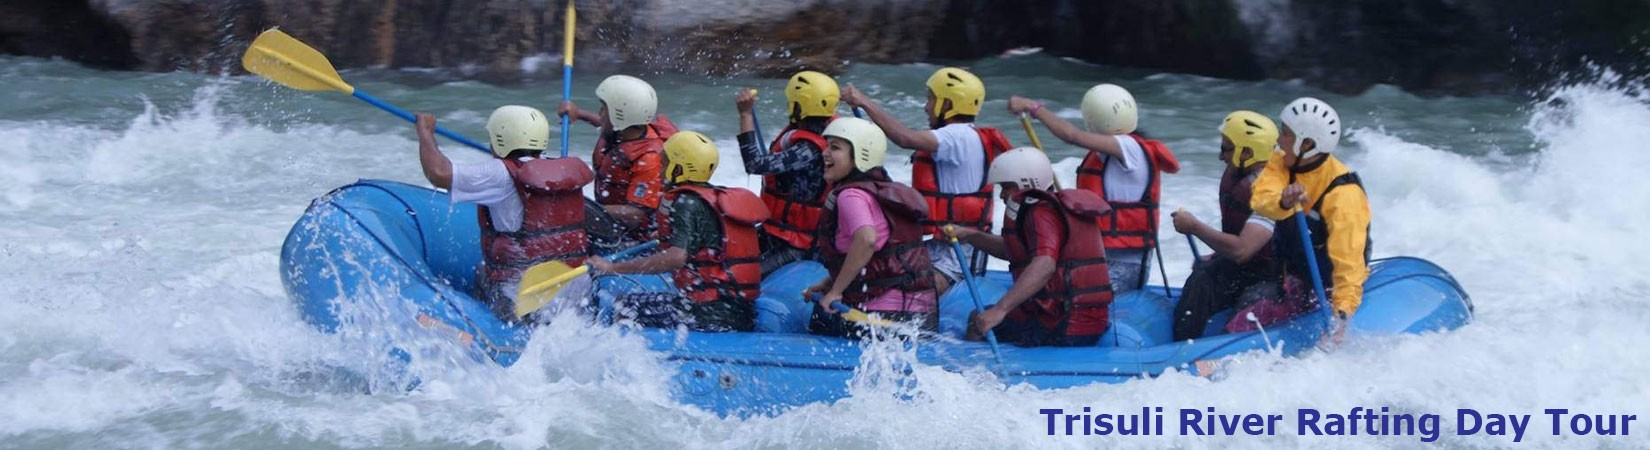 trisuli river rafting day tour